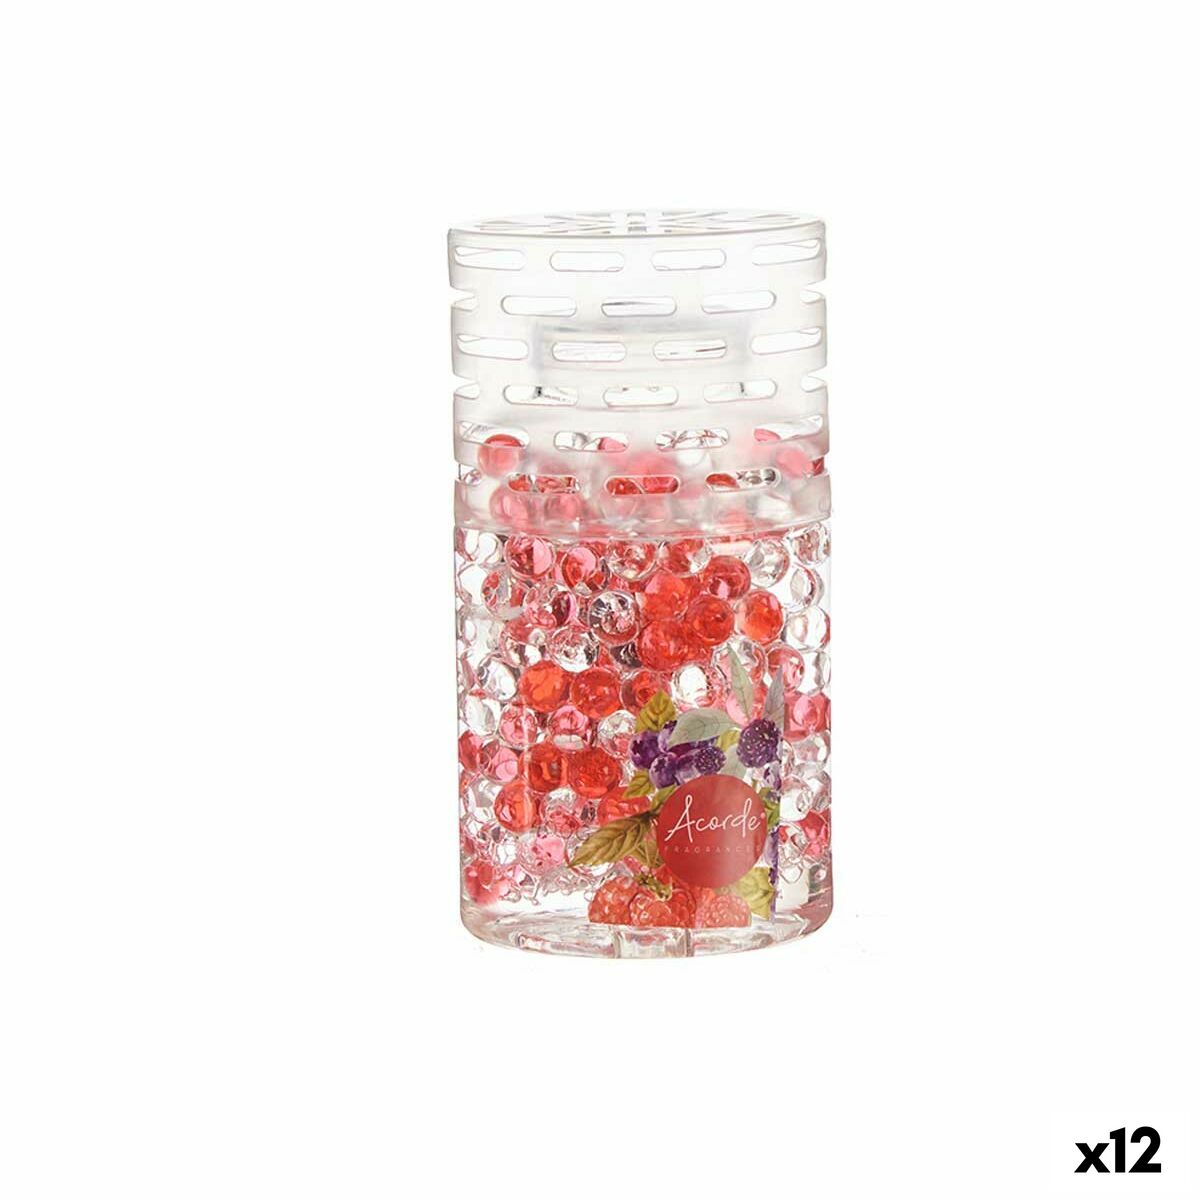 Air freshener 400 g Red berries Gel balls (12 parts)